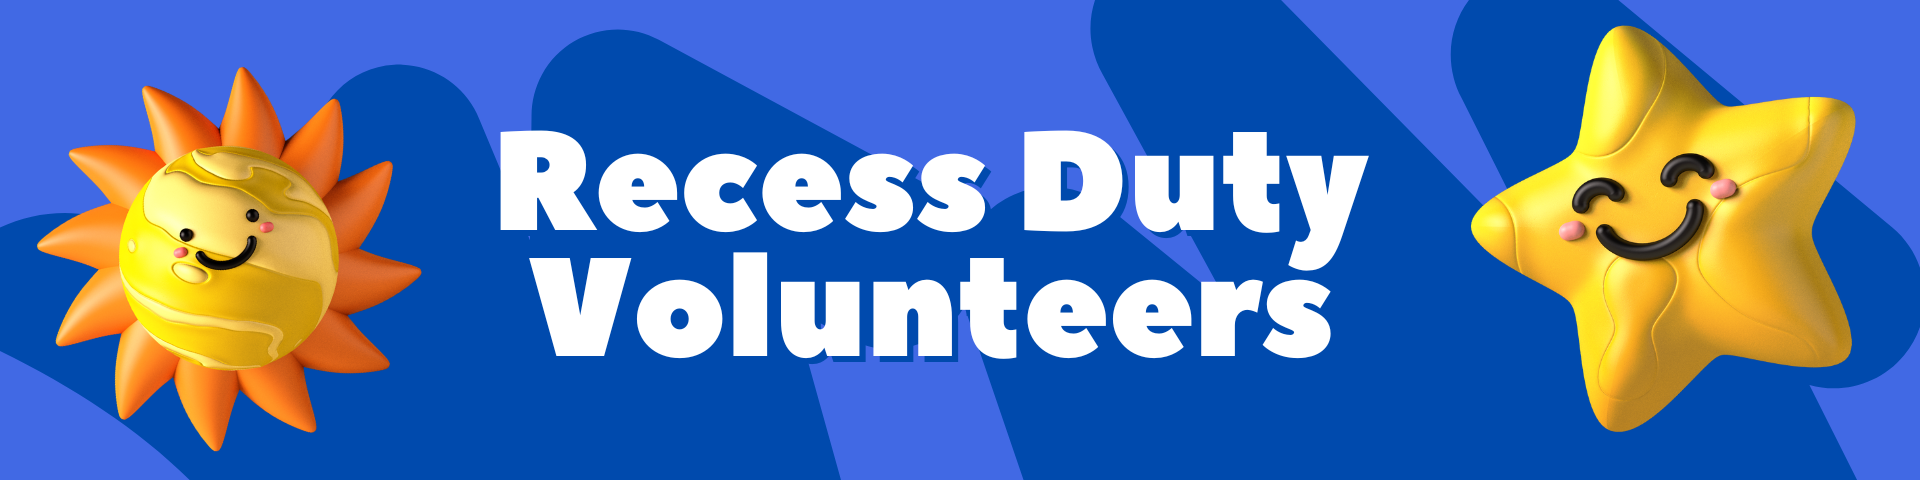 recess duty volunteer